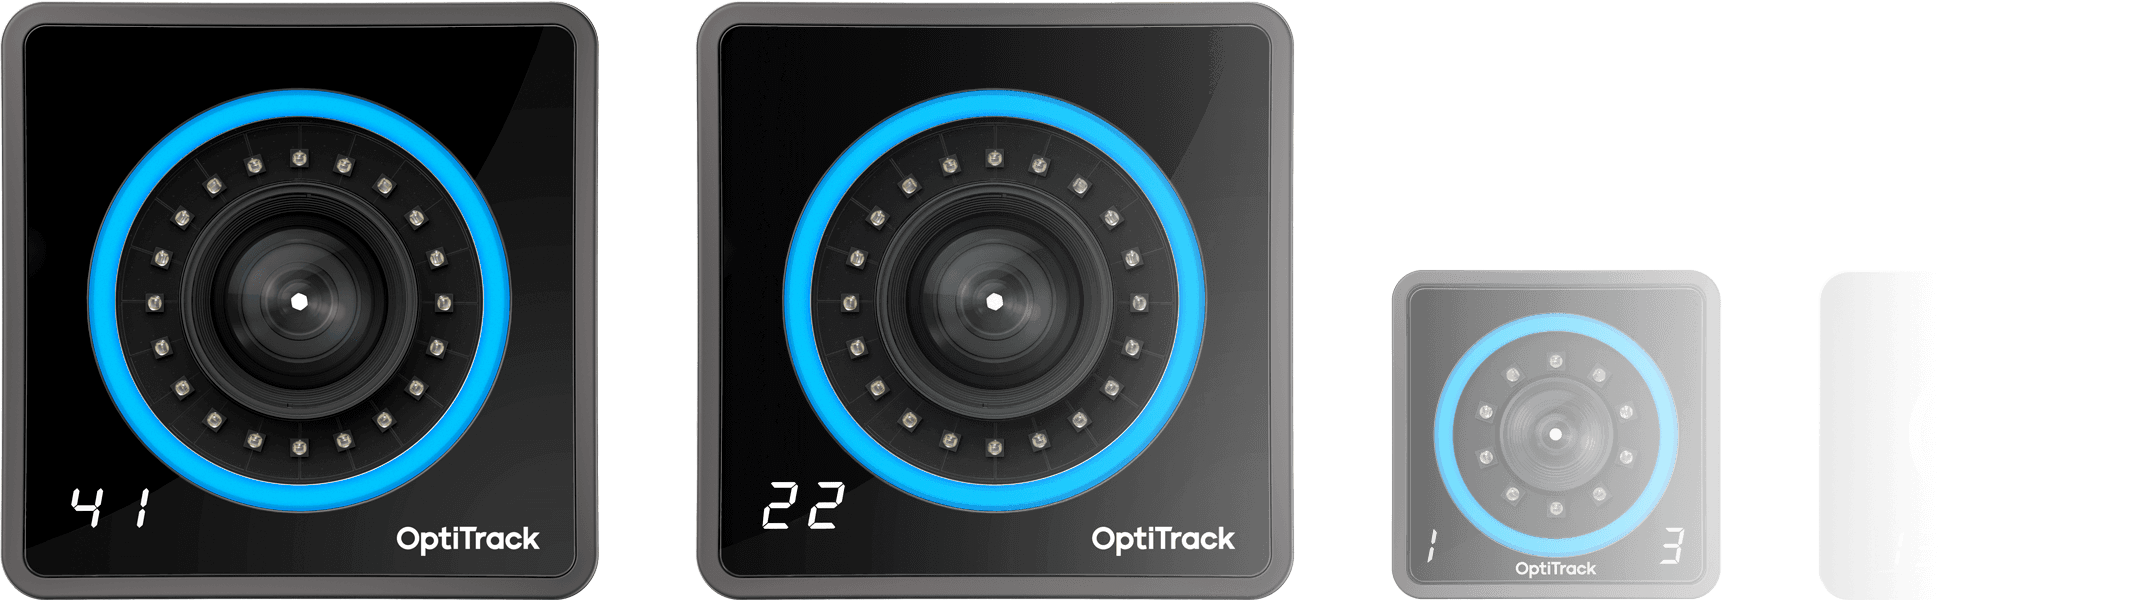 Optitrack camera tracking for virtual production